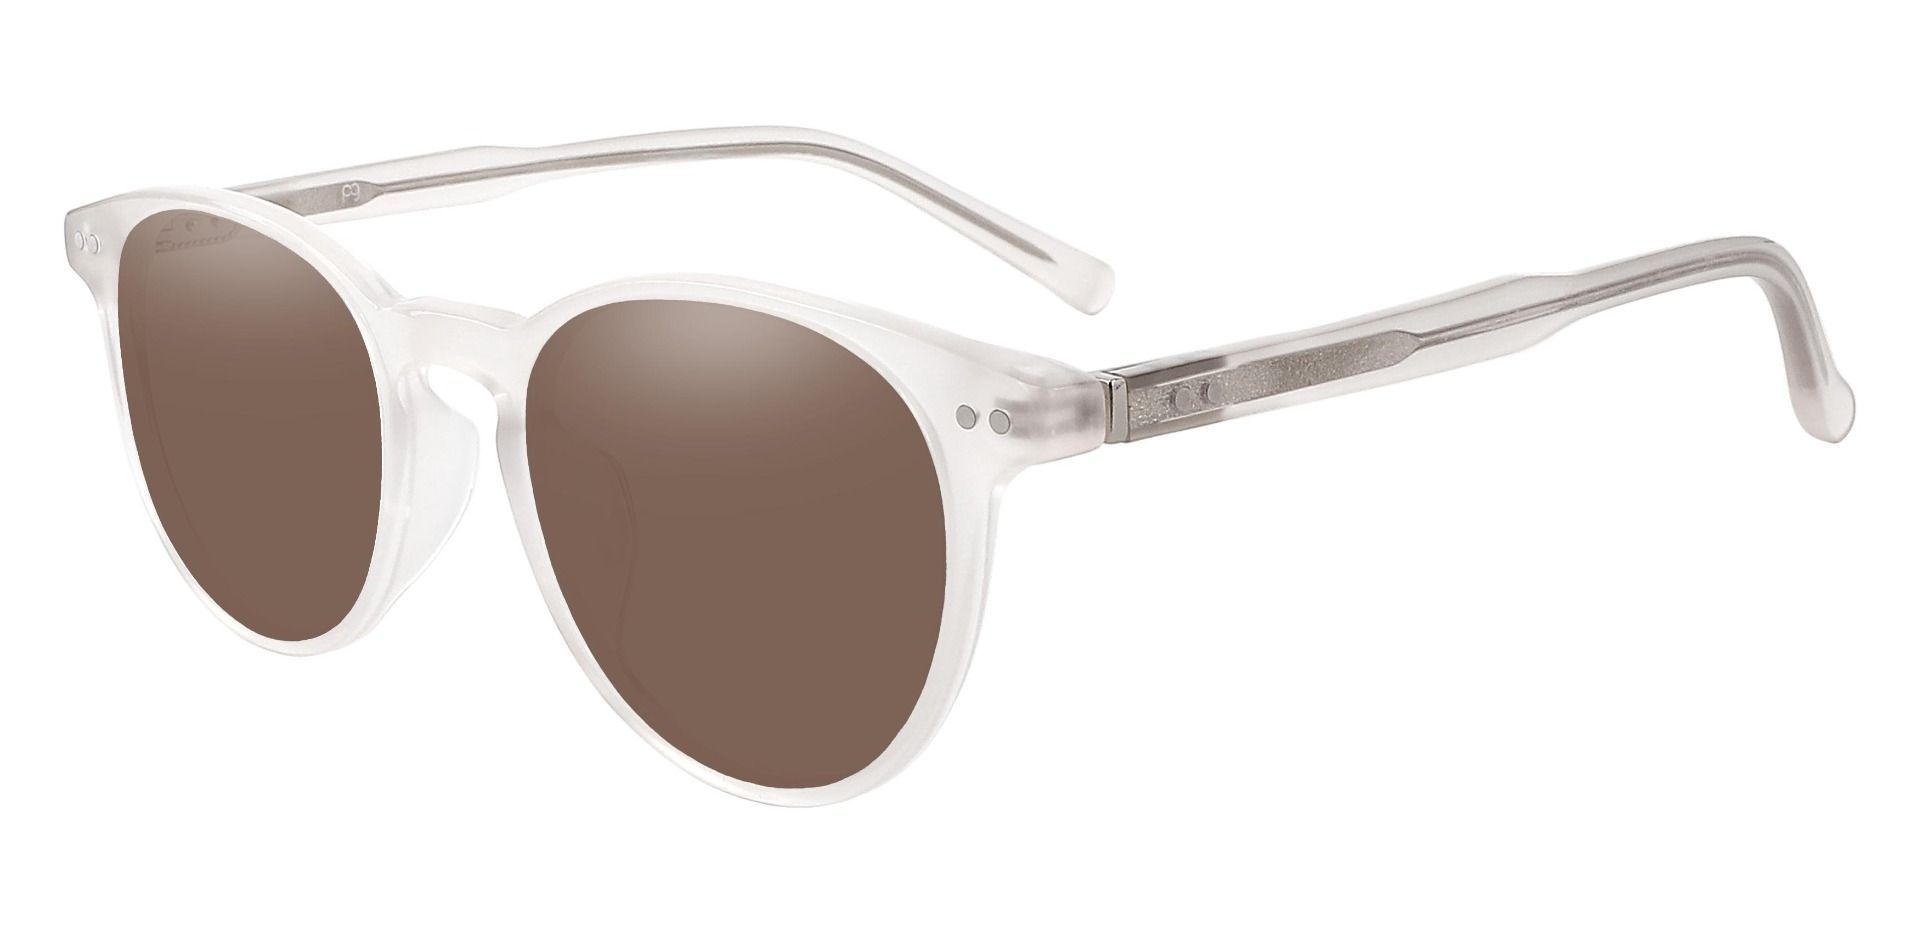 Marianna Oval Progressive Sunglasses - White Frame With Brown Lenses